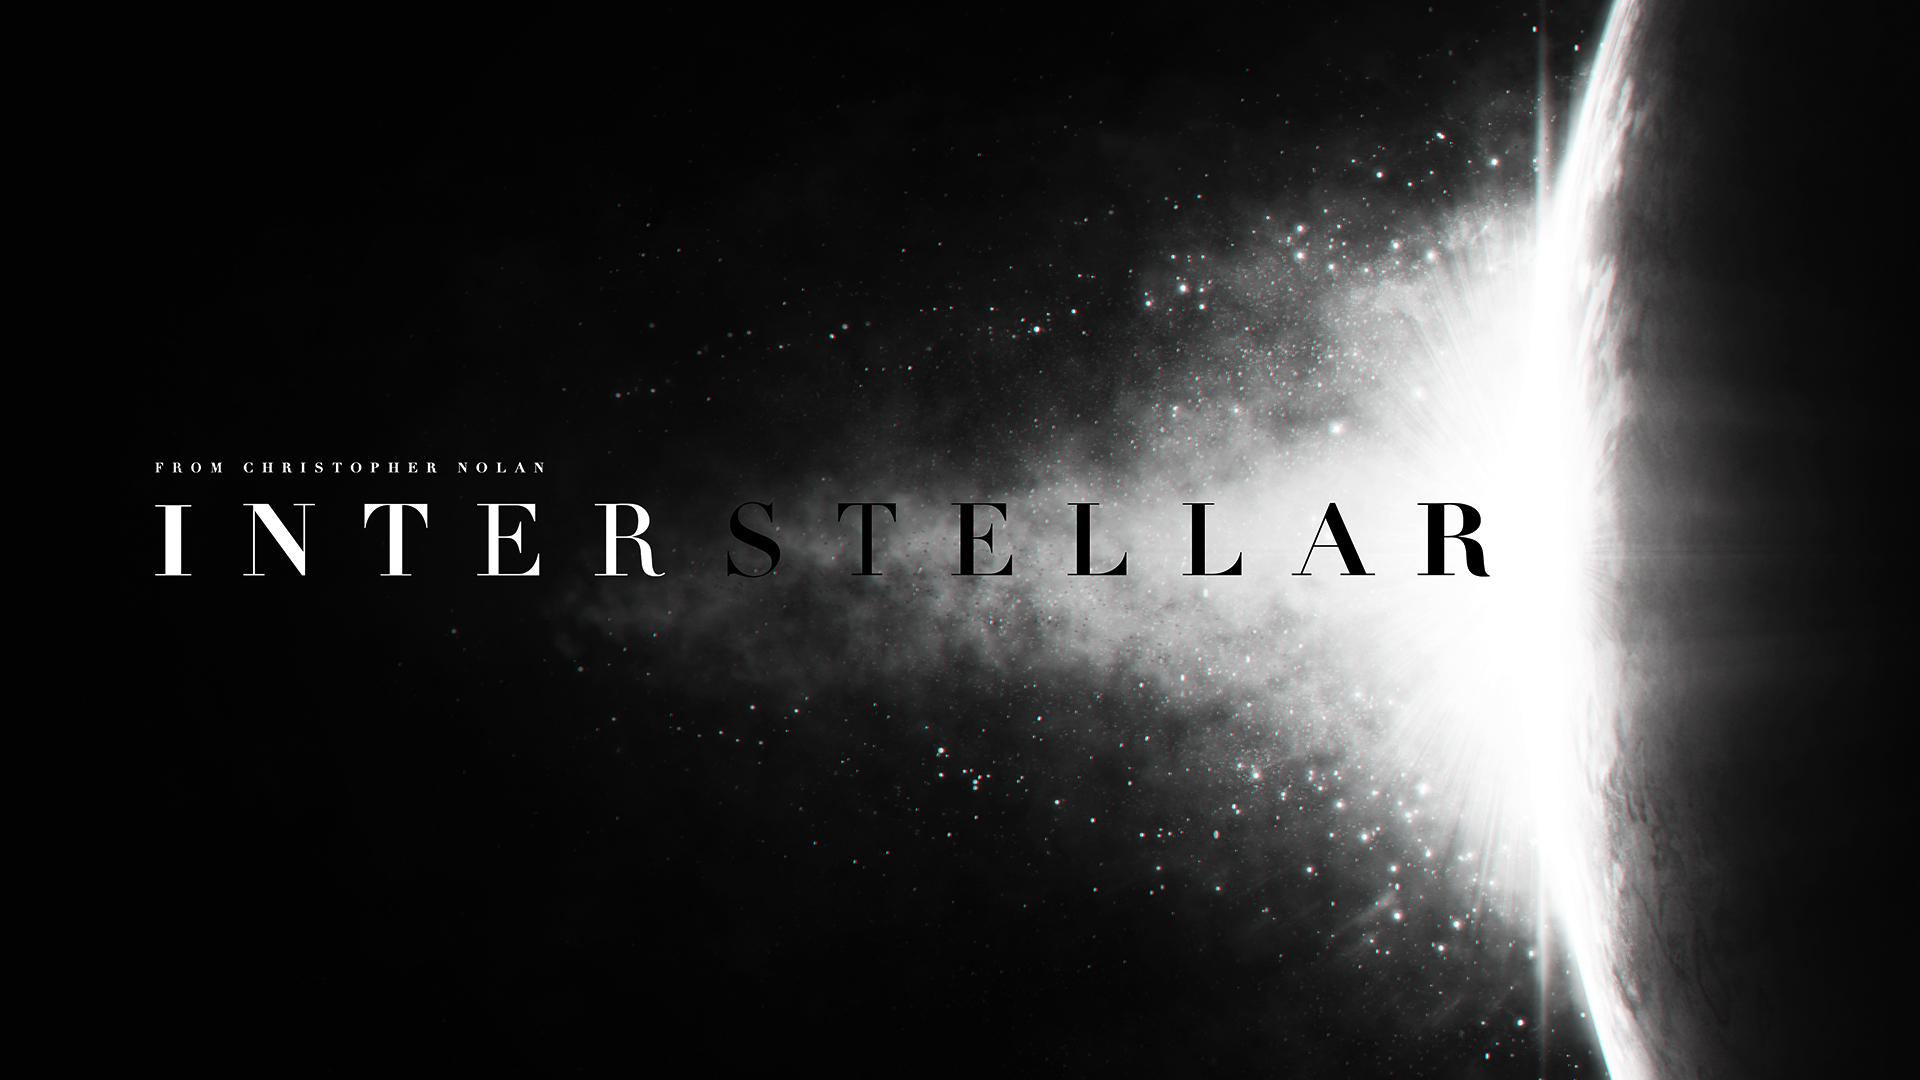 PicStreet-Interstellar